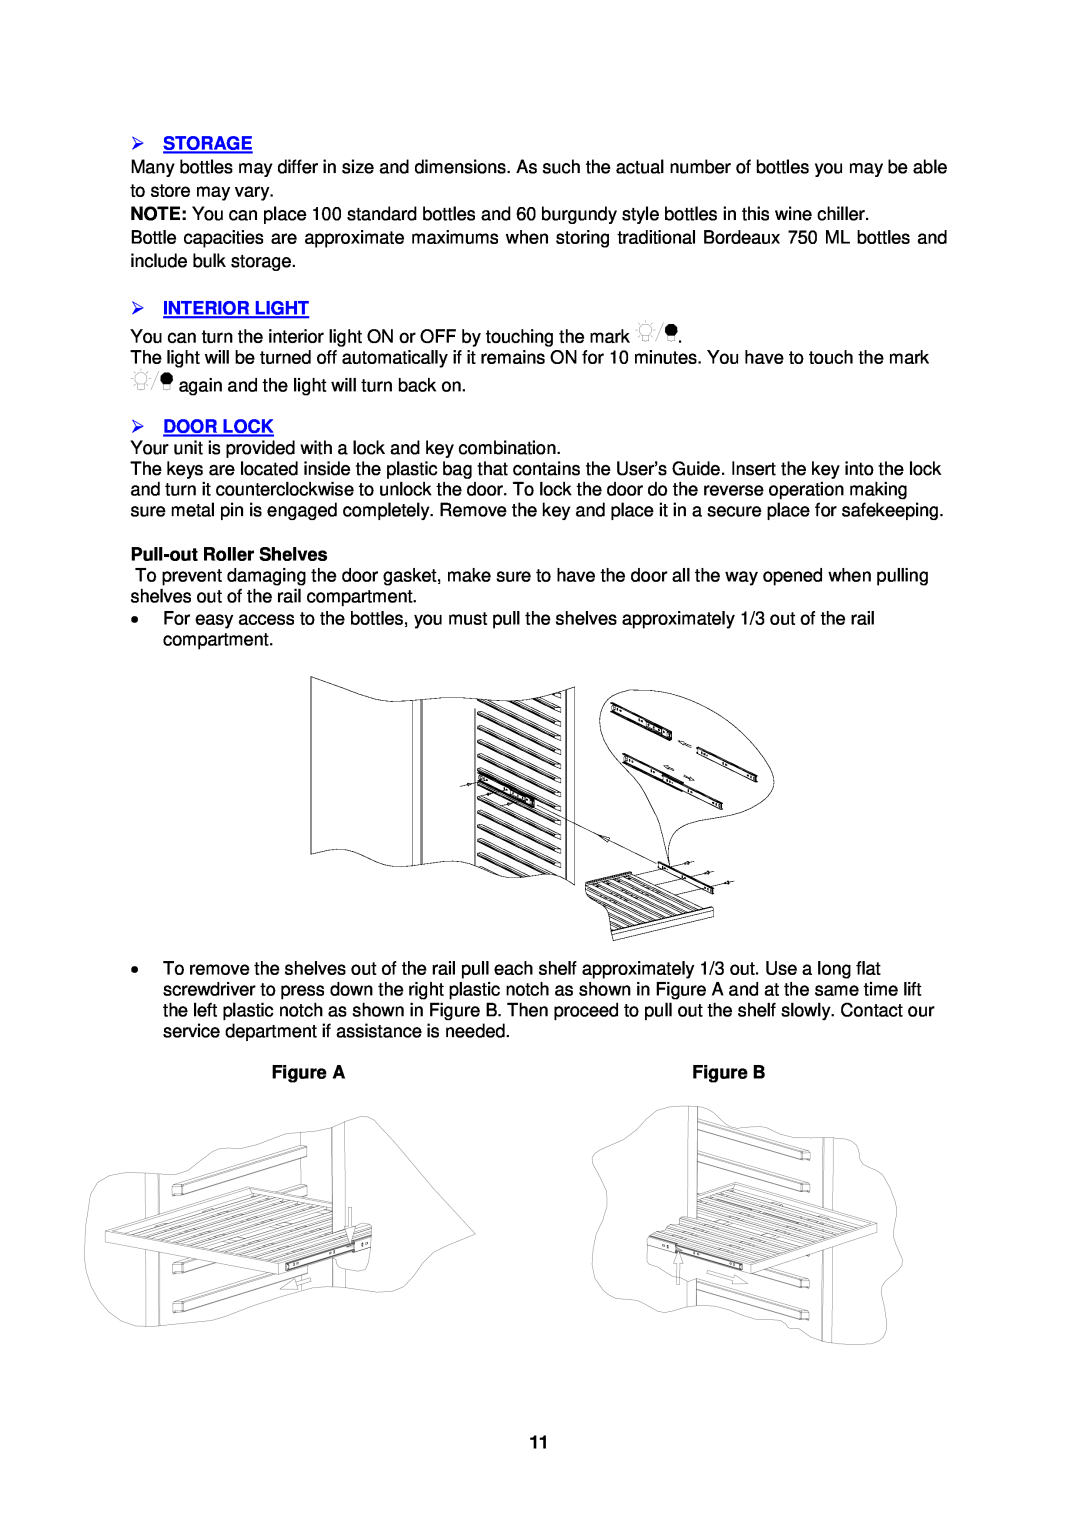 Avanti WCR682SS1 instruction manual  Storage,  Interior Light,  Door Lock, Pull-out Roller Shelves, Figure A, Figure B 